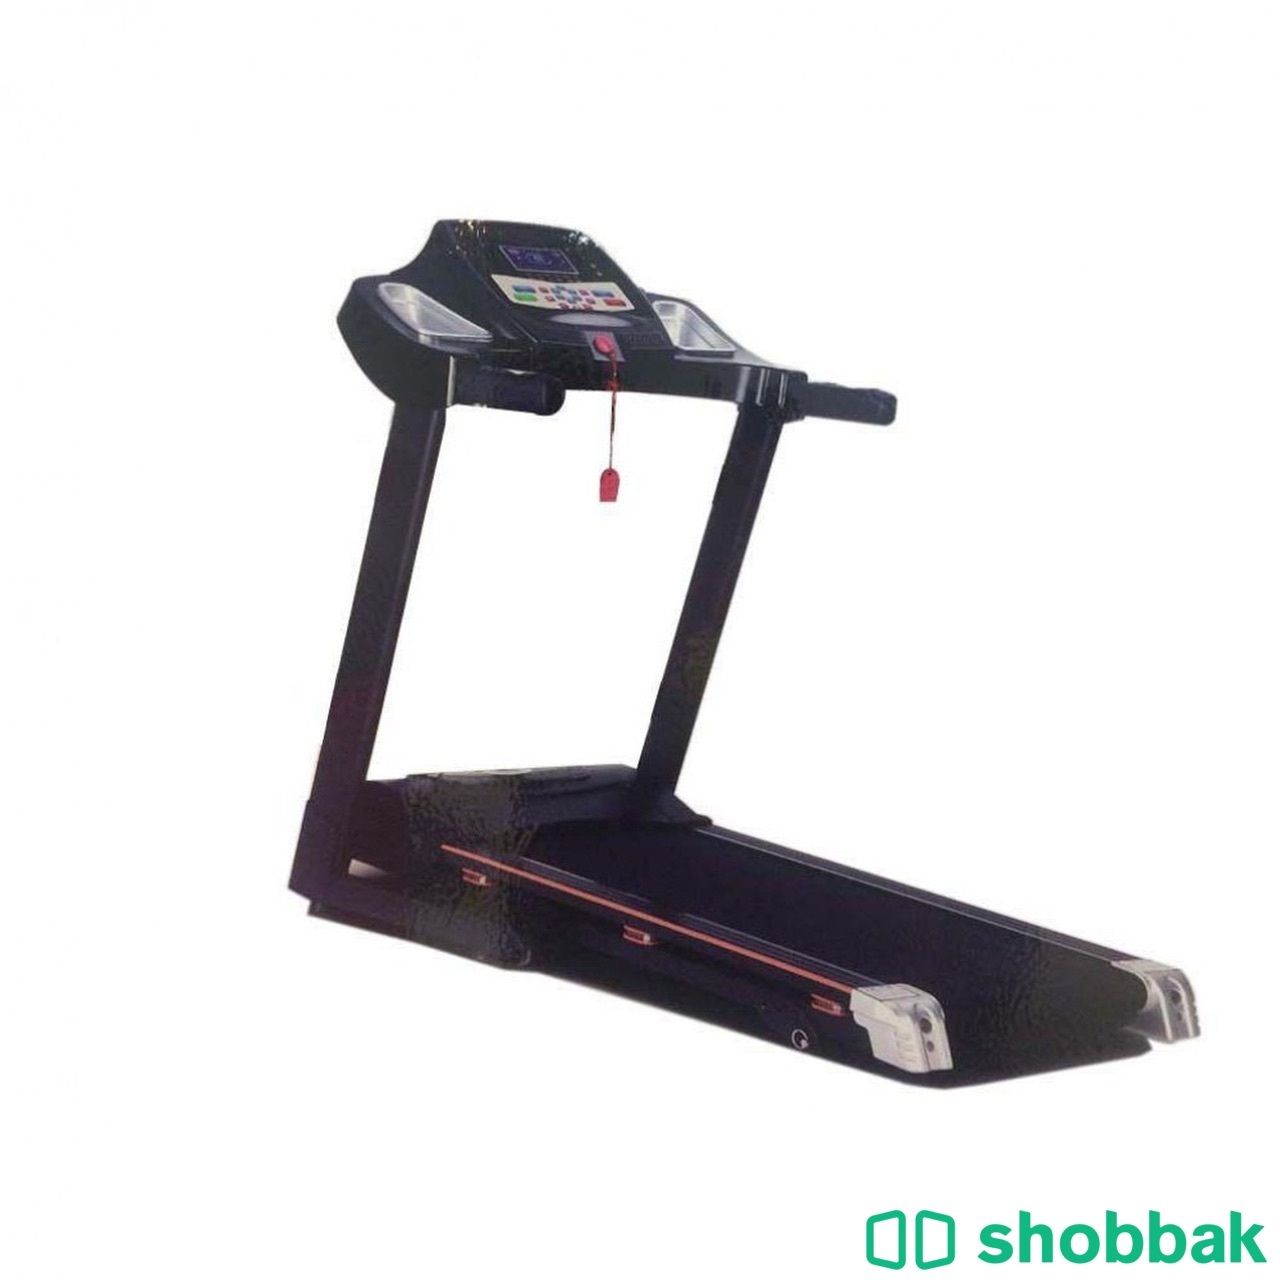 سير كهربائي يتحمل 100كغ Treadmill   Shobbak Saudi Arabia